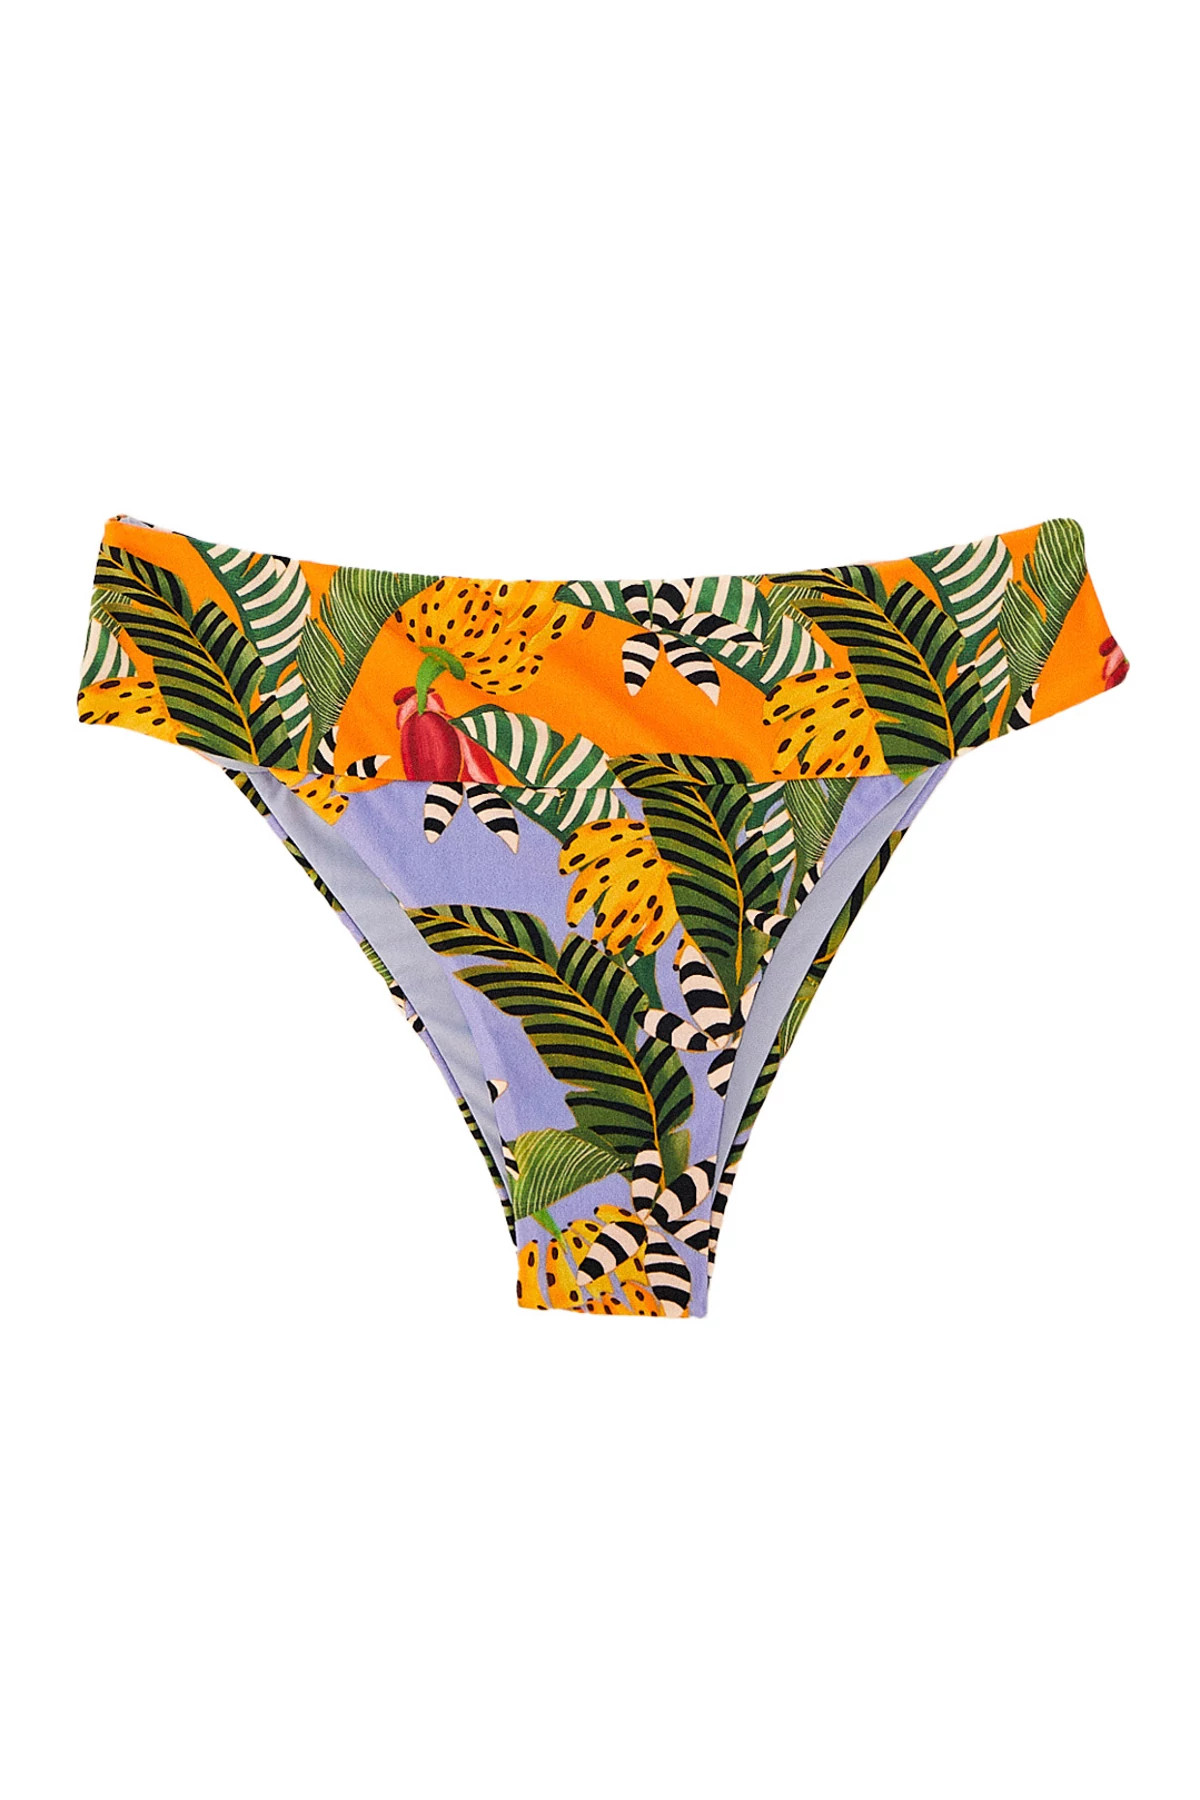 STRIPED BANANAS Striped Bananas Brazilian High Waist Bikini Bottom image number 4